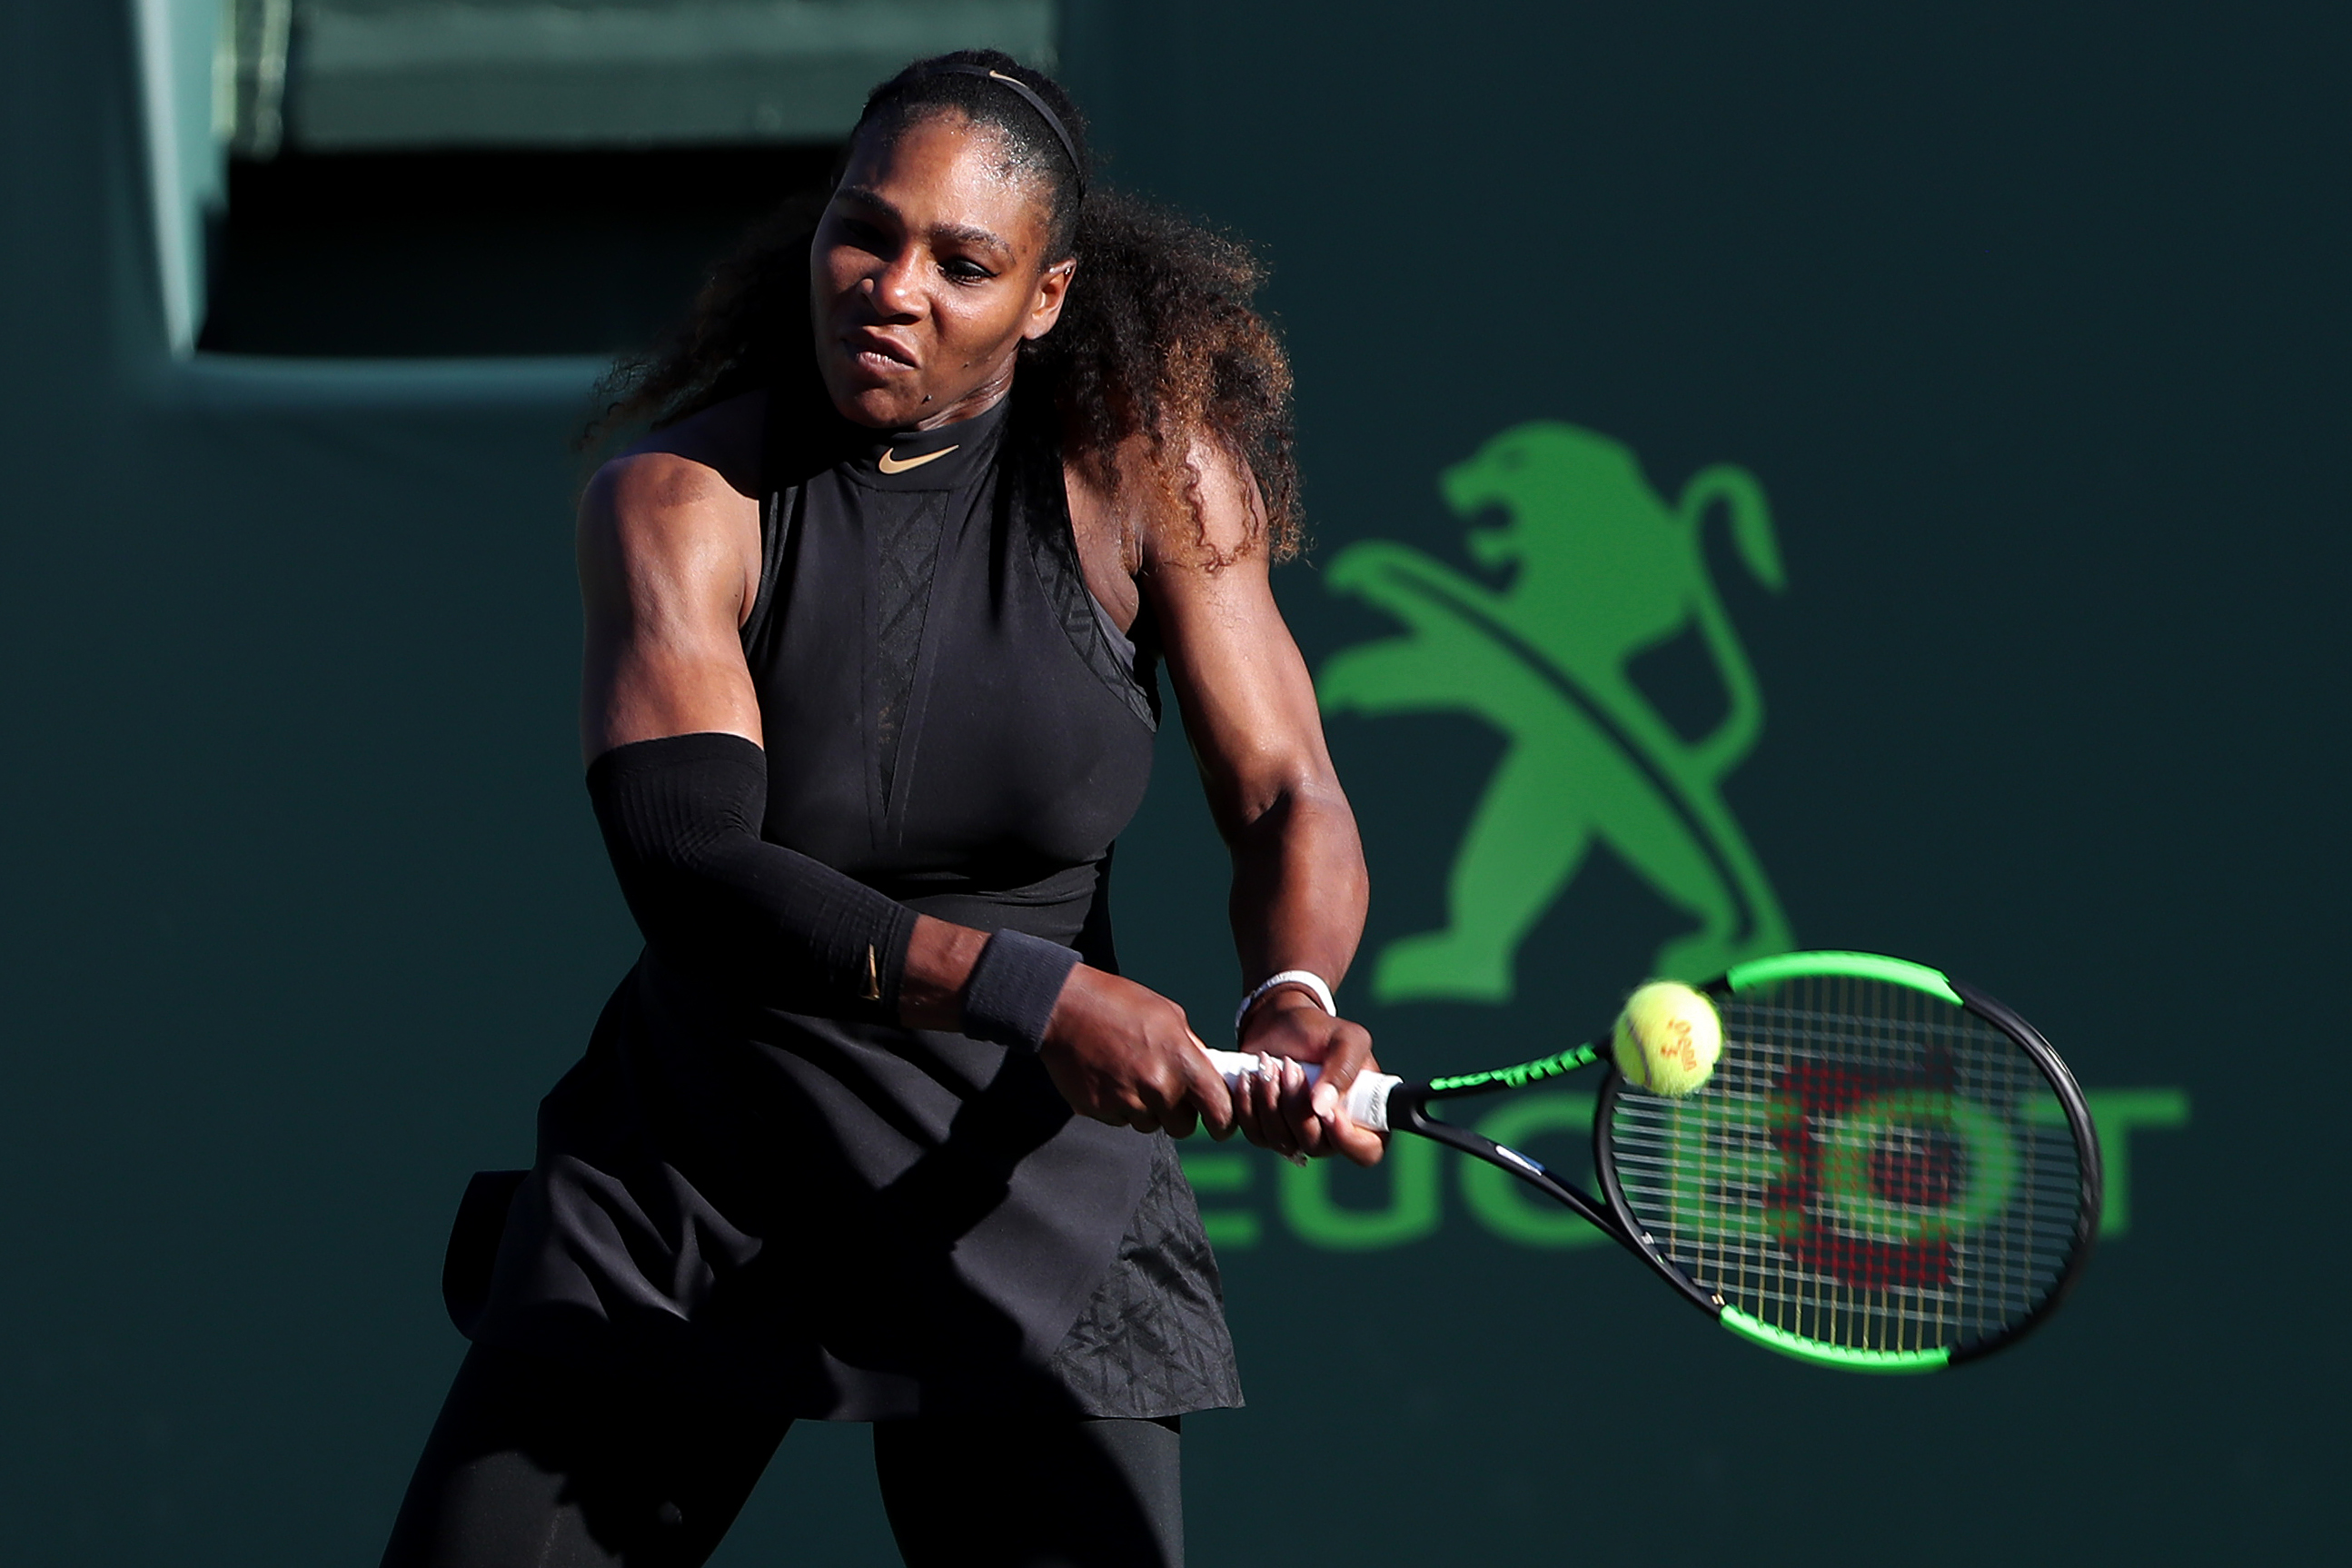 9. Serena Williams